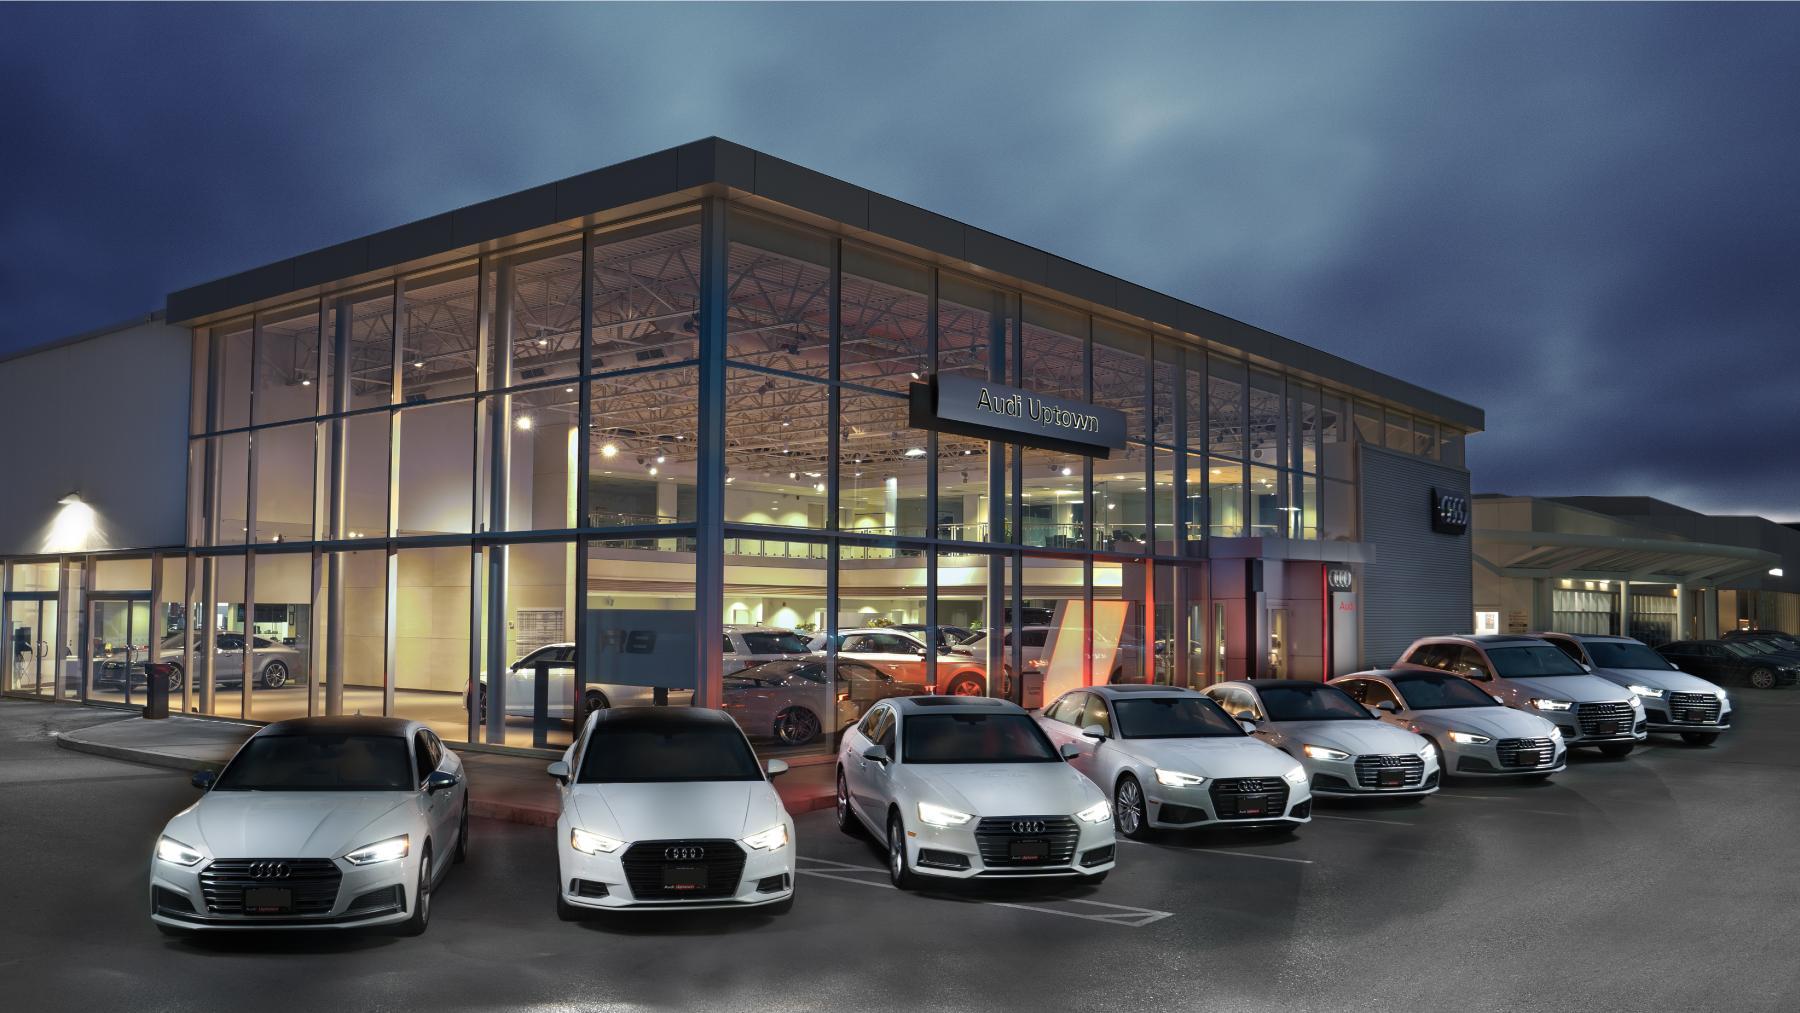 Audi Uptown Store Image